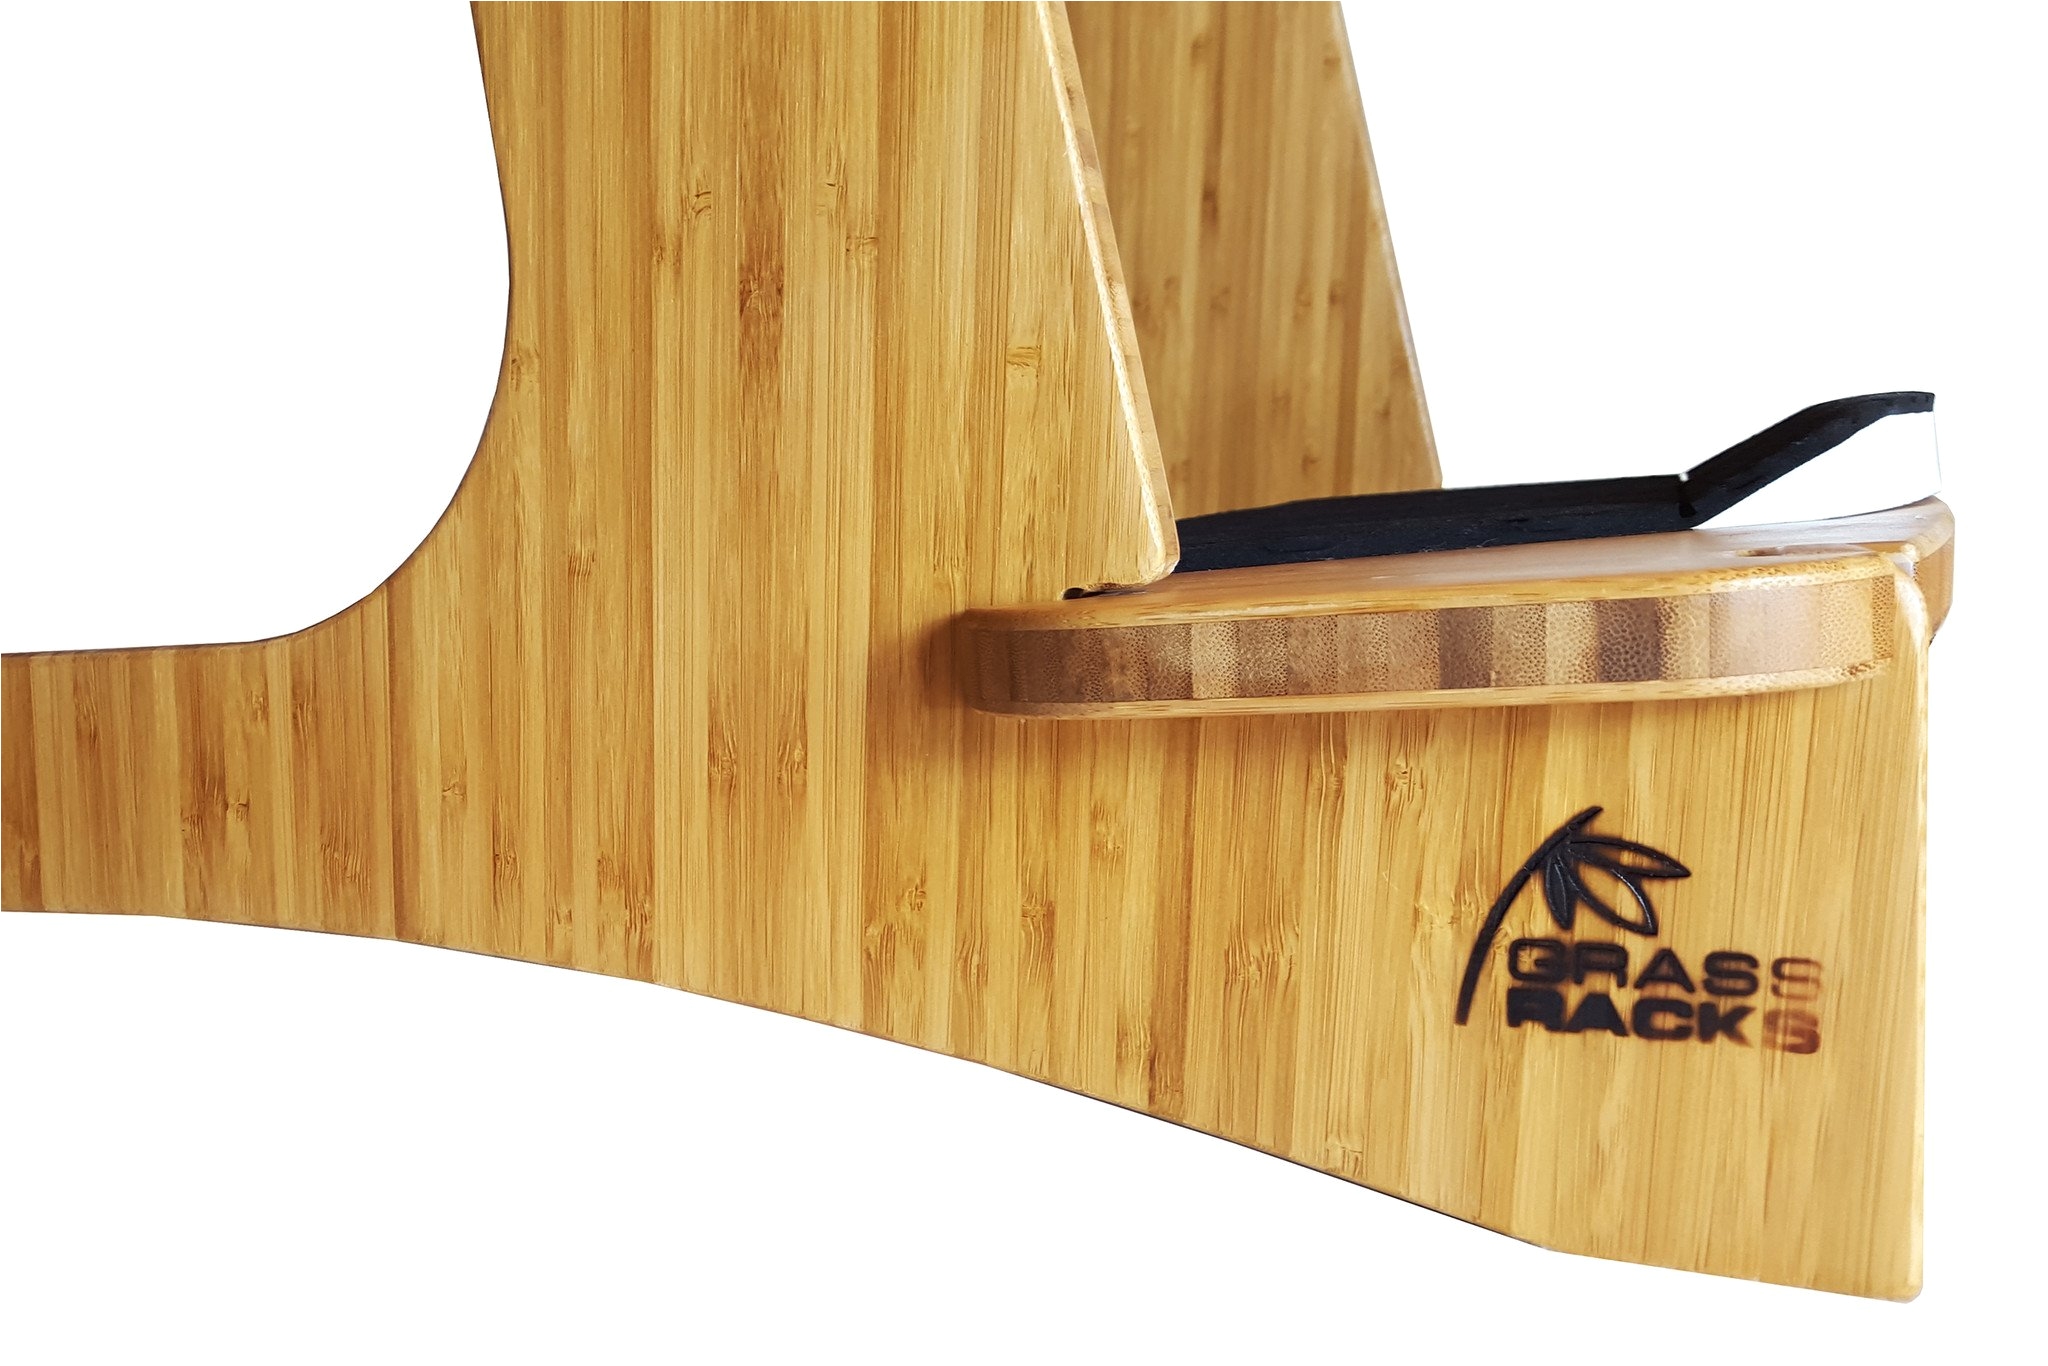 in store paddleboard surf rack by grassracks freestanding surfboard rack with kicker a vertical